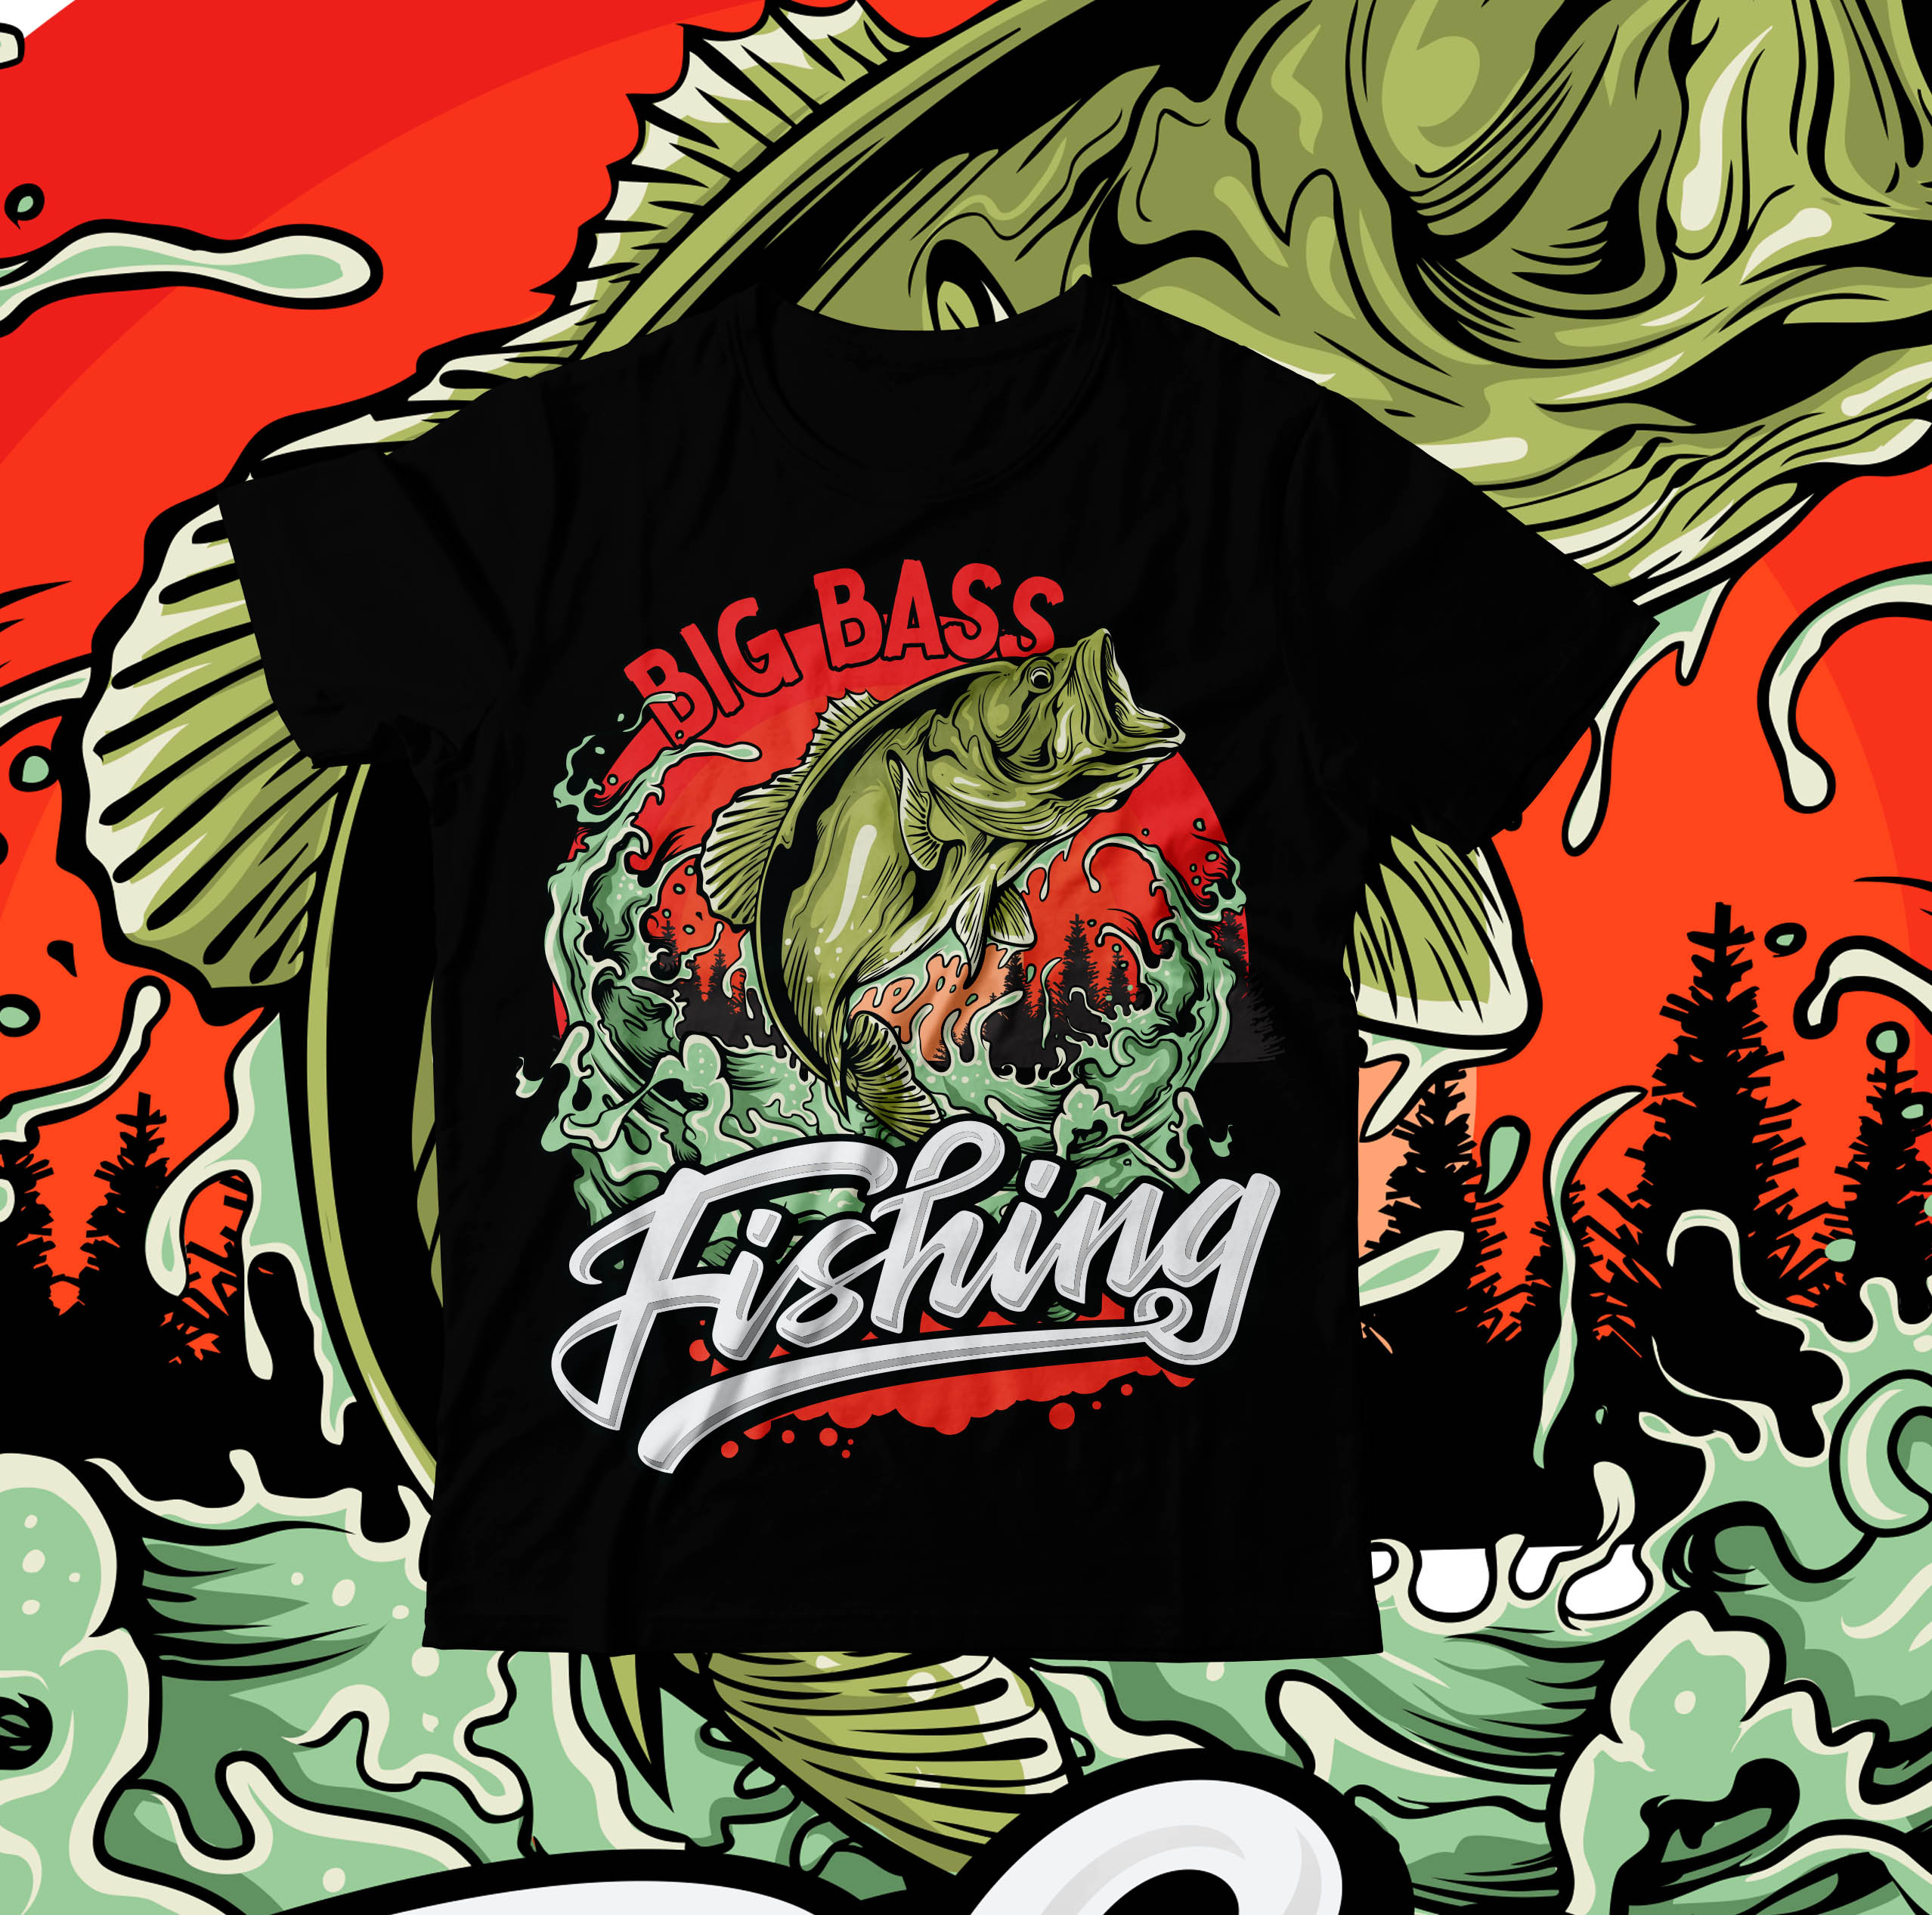 Big Bass Fishing T-Shirt Design On Sale , Big Bass Fishing T-Shirt Vector  Design , Fishing t shirt,fishing t shirt design on sale,fishing vector t  shirt design, fishing graphic t - Buy t-shirt designs